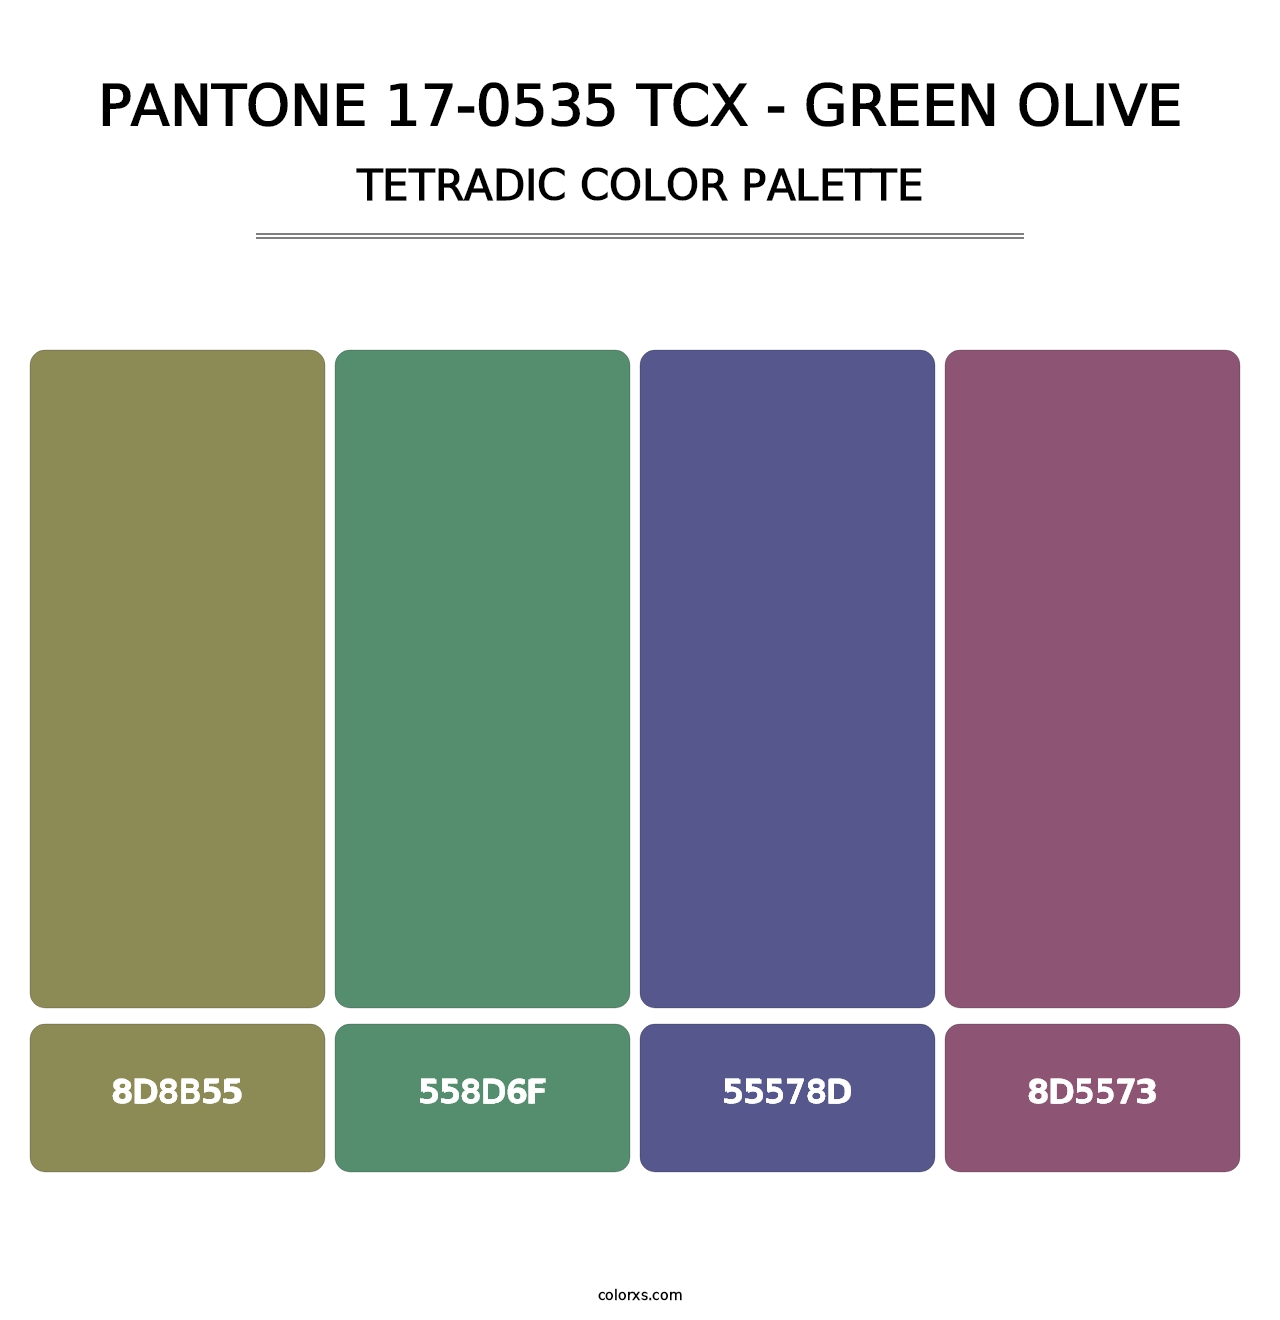 PANTONE 17-0535 TCX - Green Olive - Tetradic Color Palette